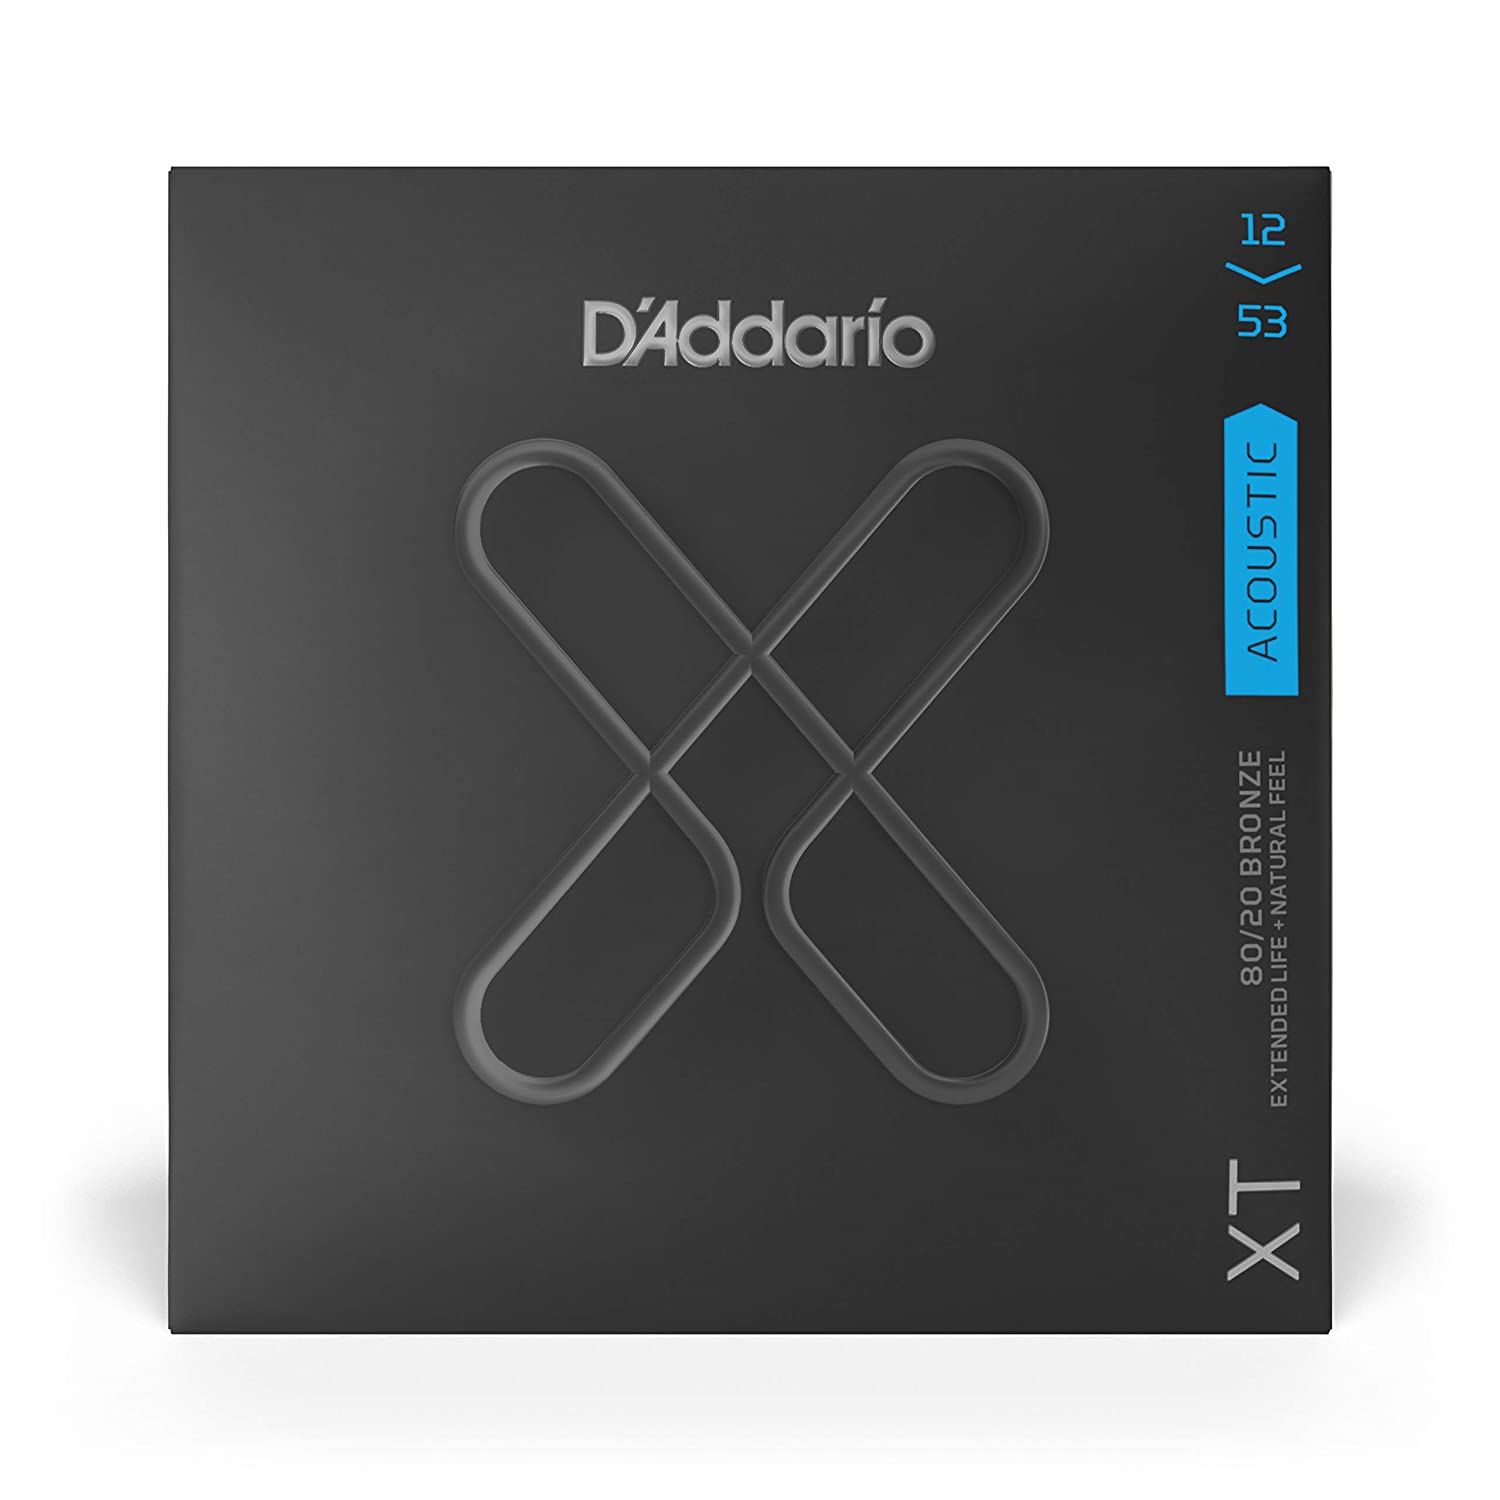 Daddario XT strings online price in india